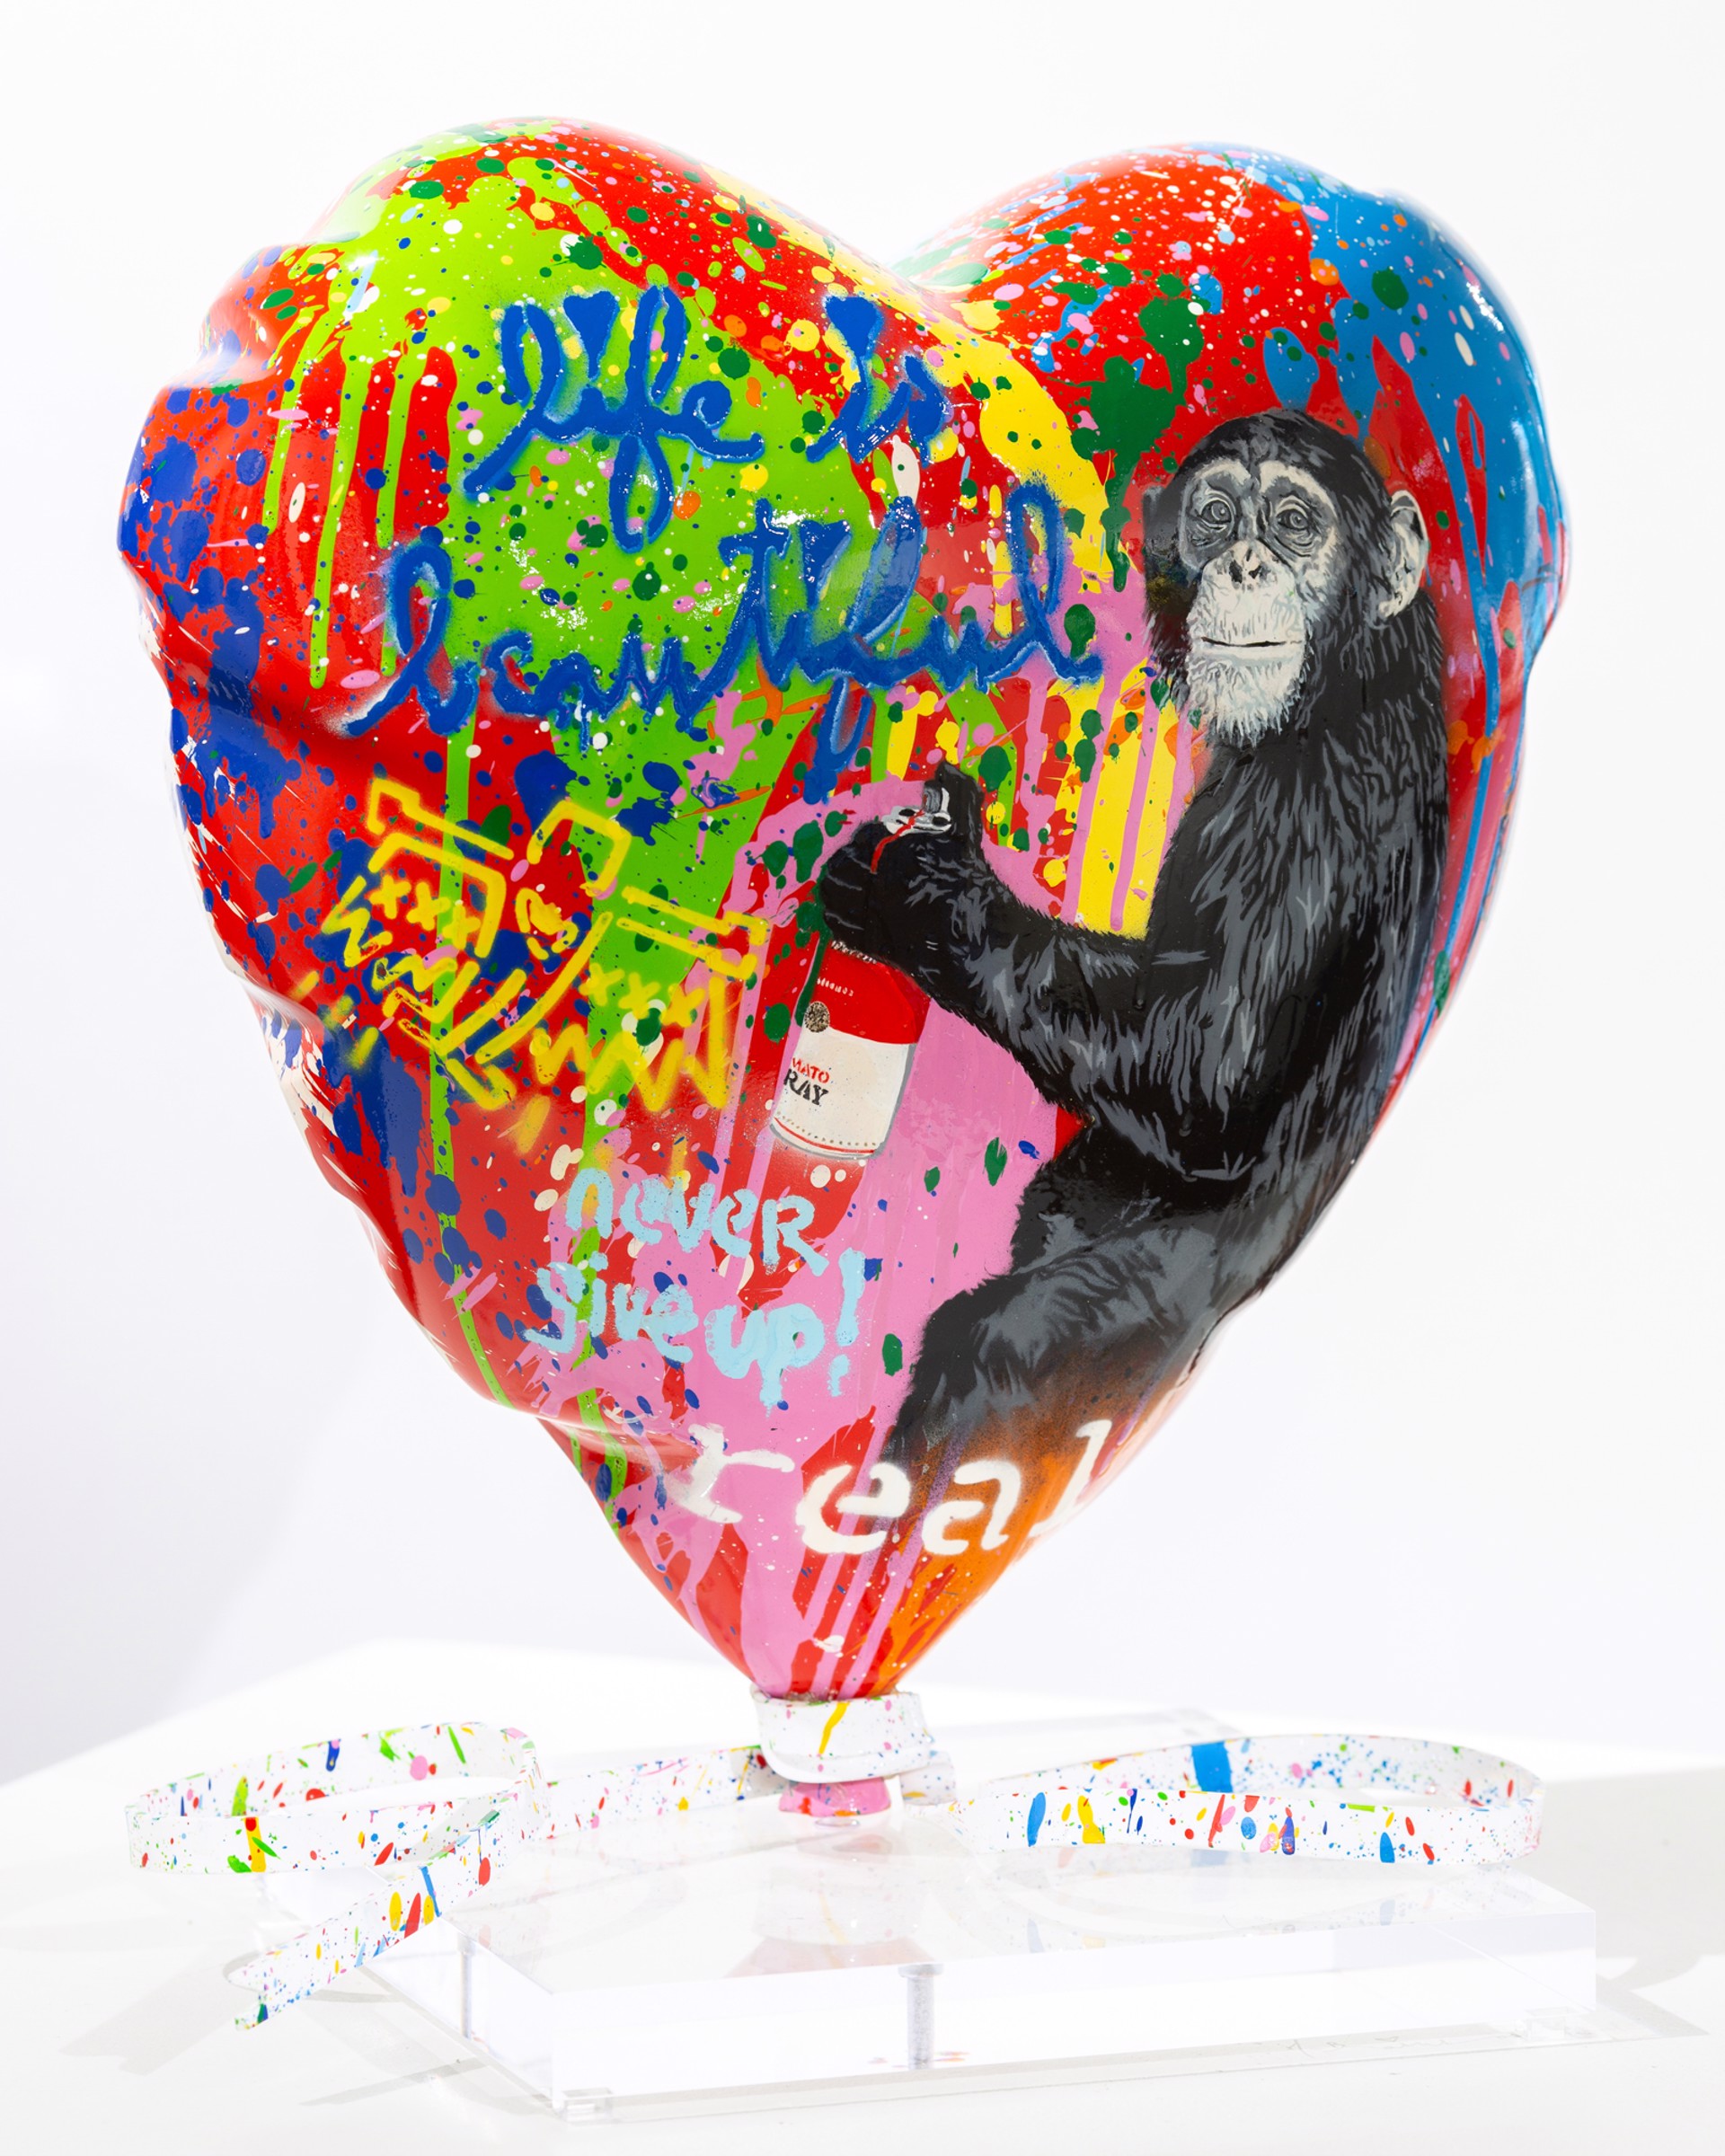 Balloon Heart by Mr. Brainwash